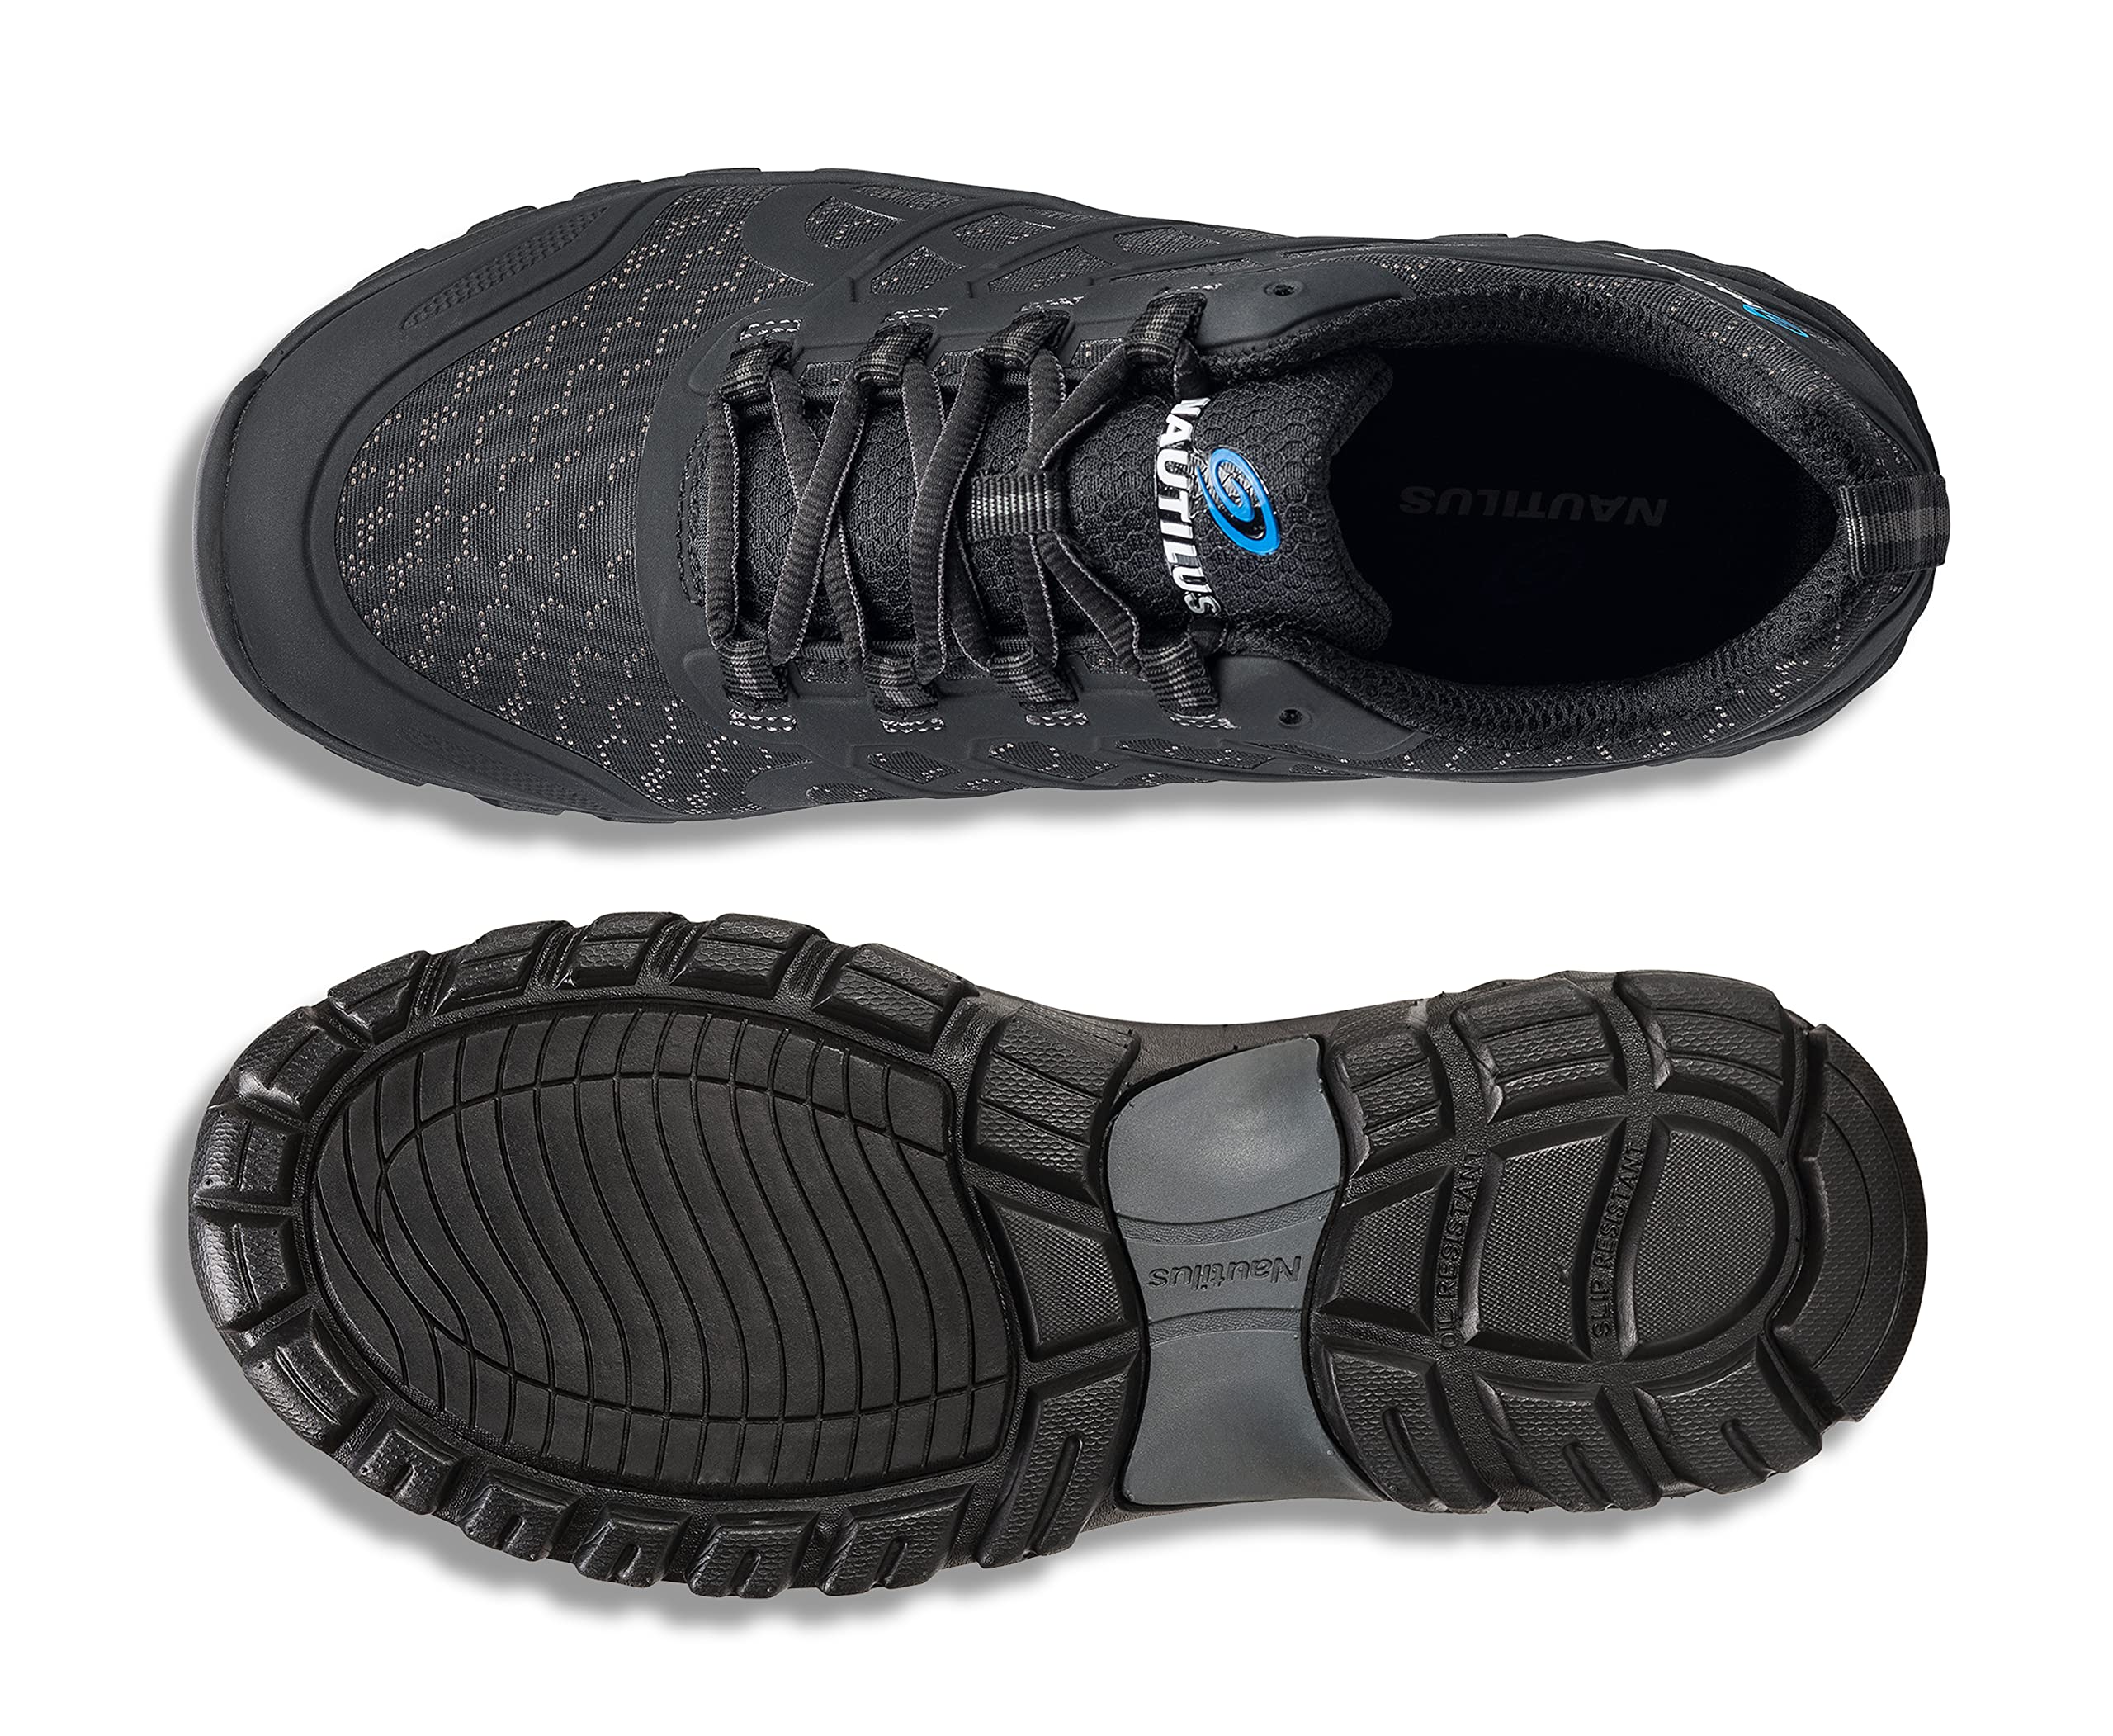 Nautilus Safety Footwear Men's Stratus Industrial Shoe